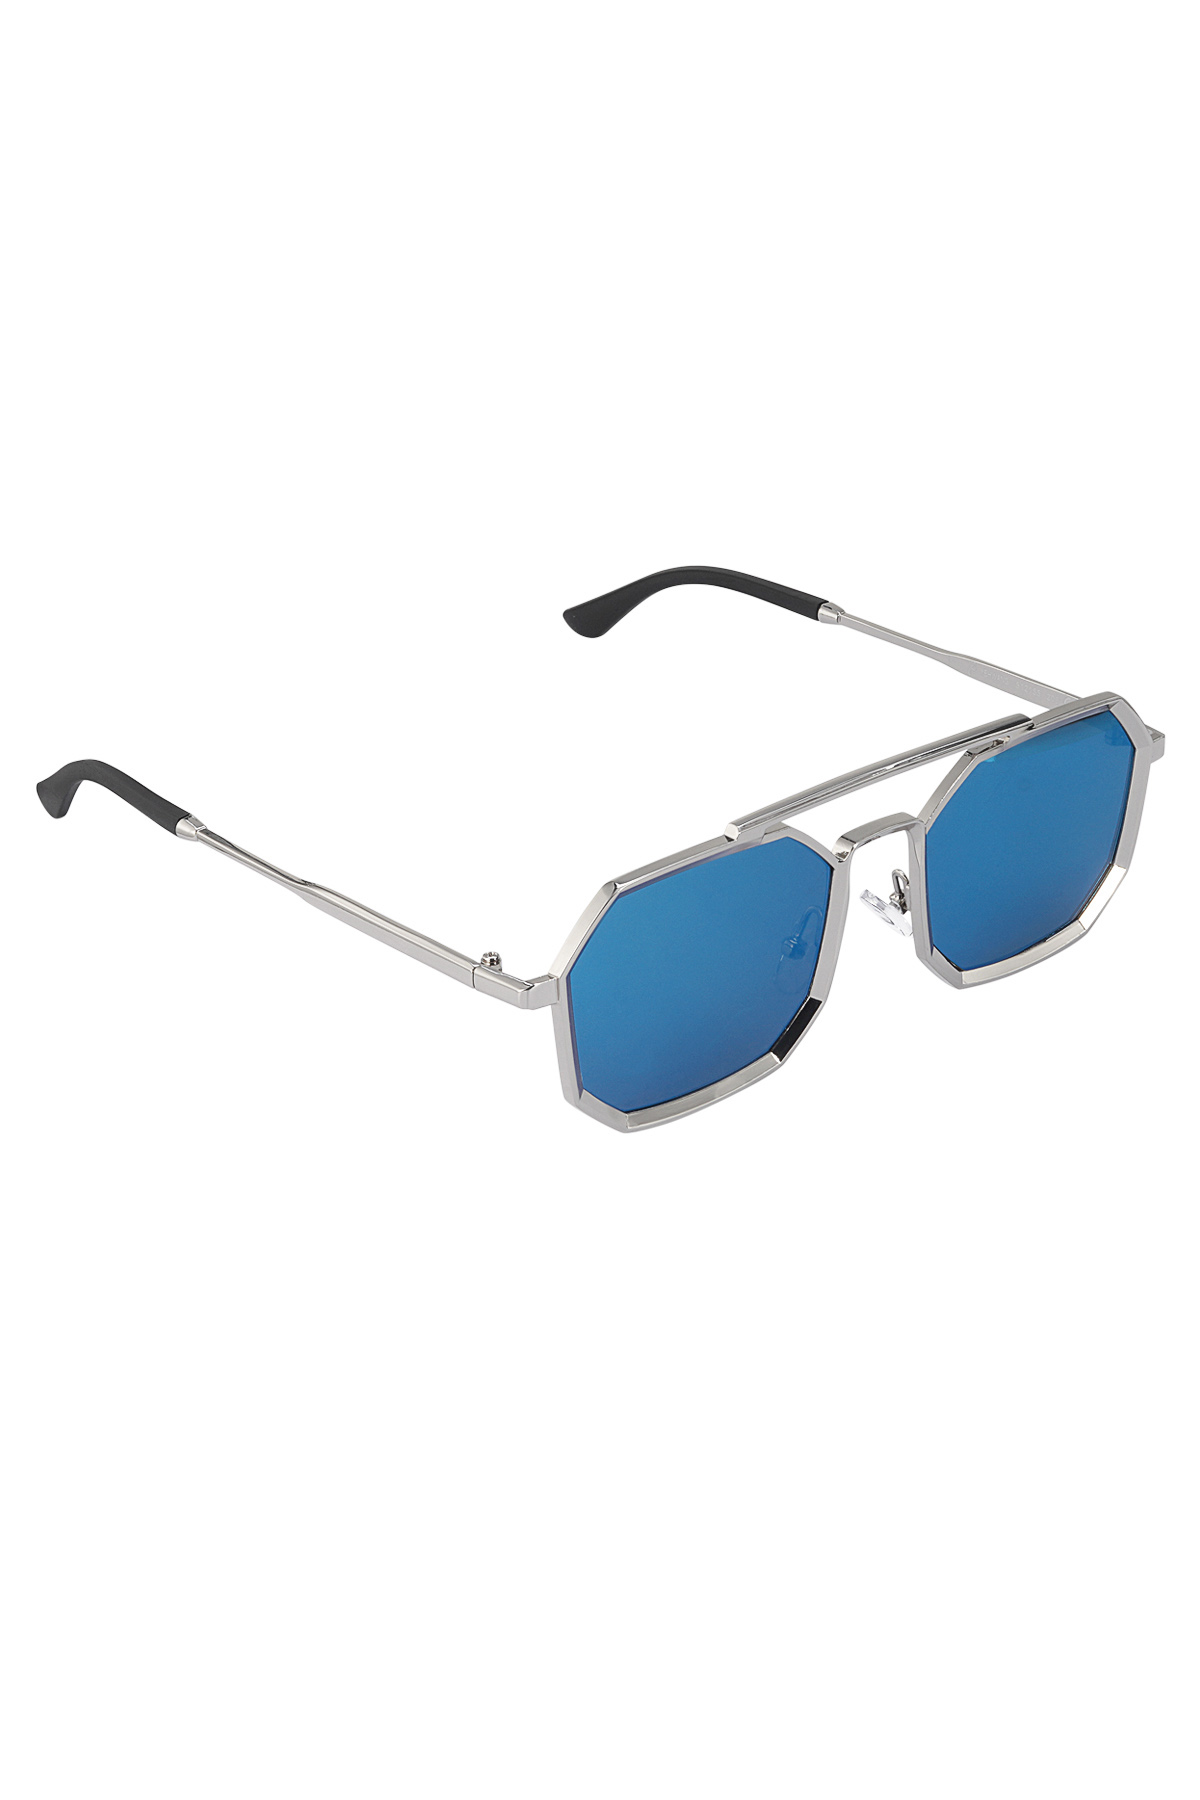 Gafas de sol LuminLens - azul plateado h5 